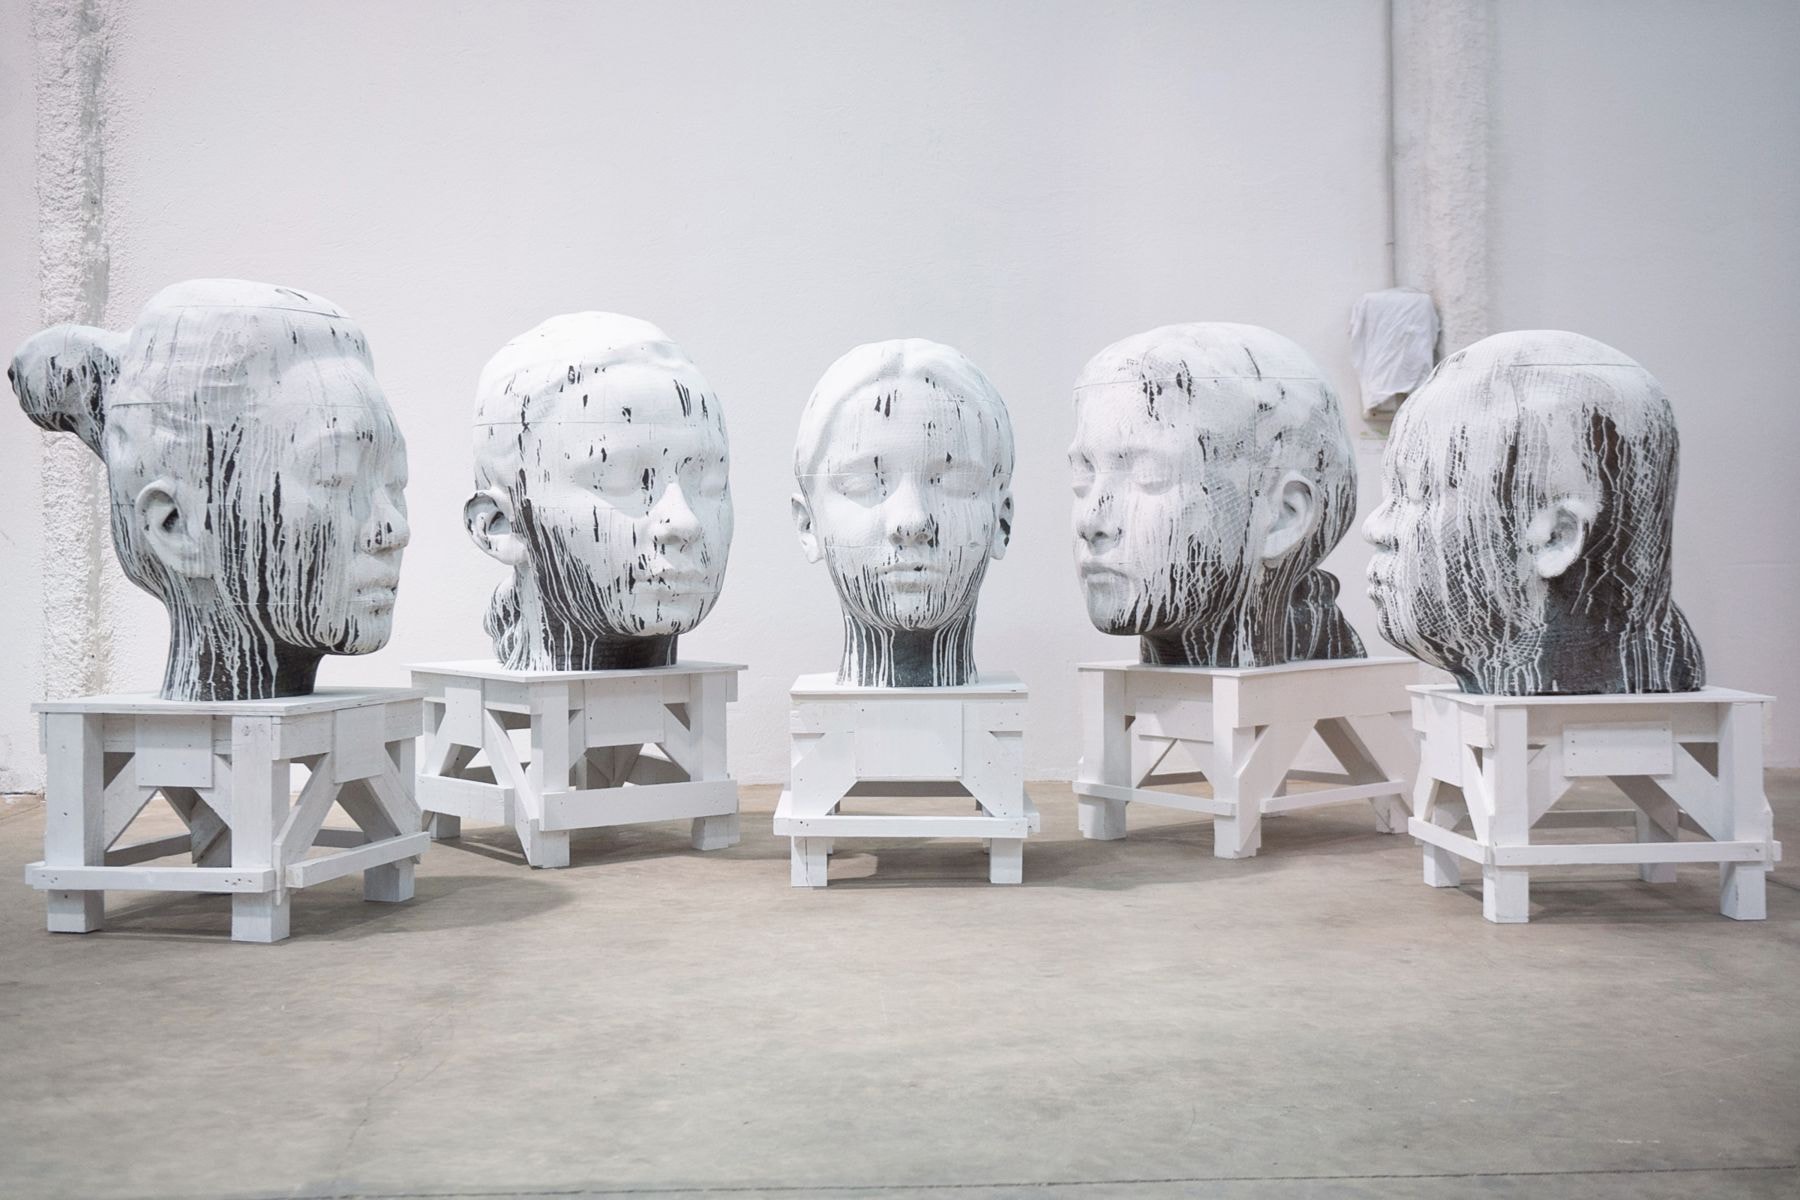 jaume plensa nocturne gray warehouse sculptures exhibitions